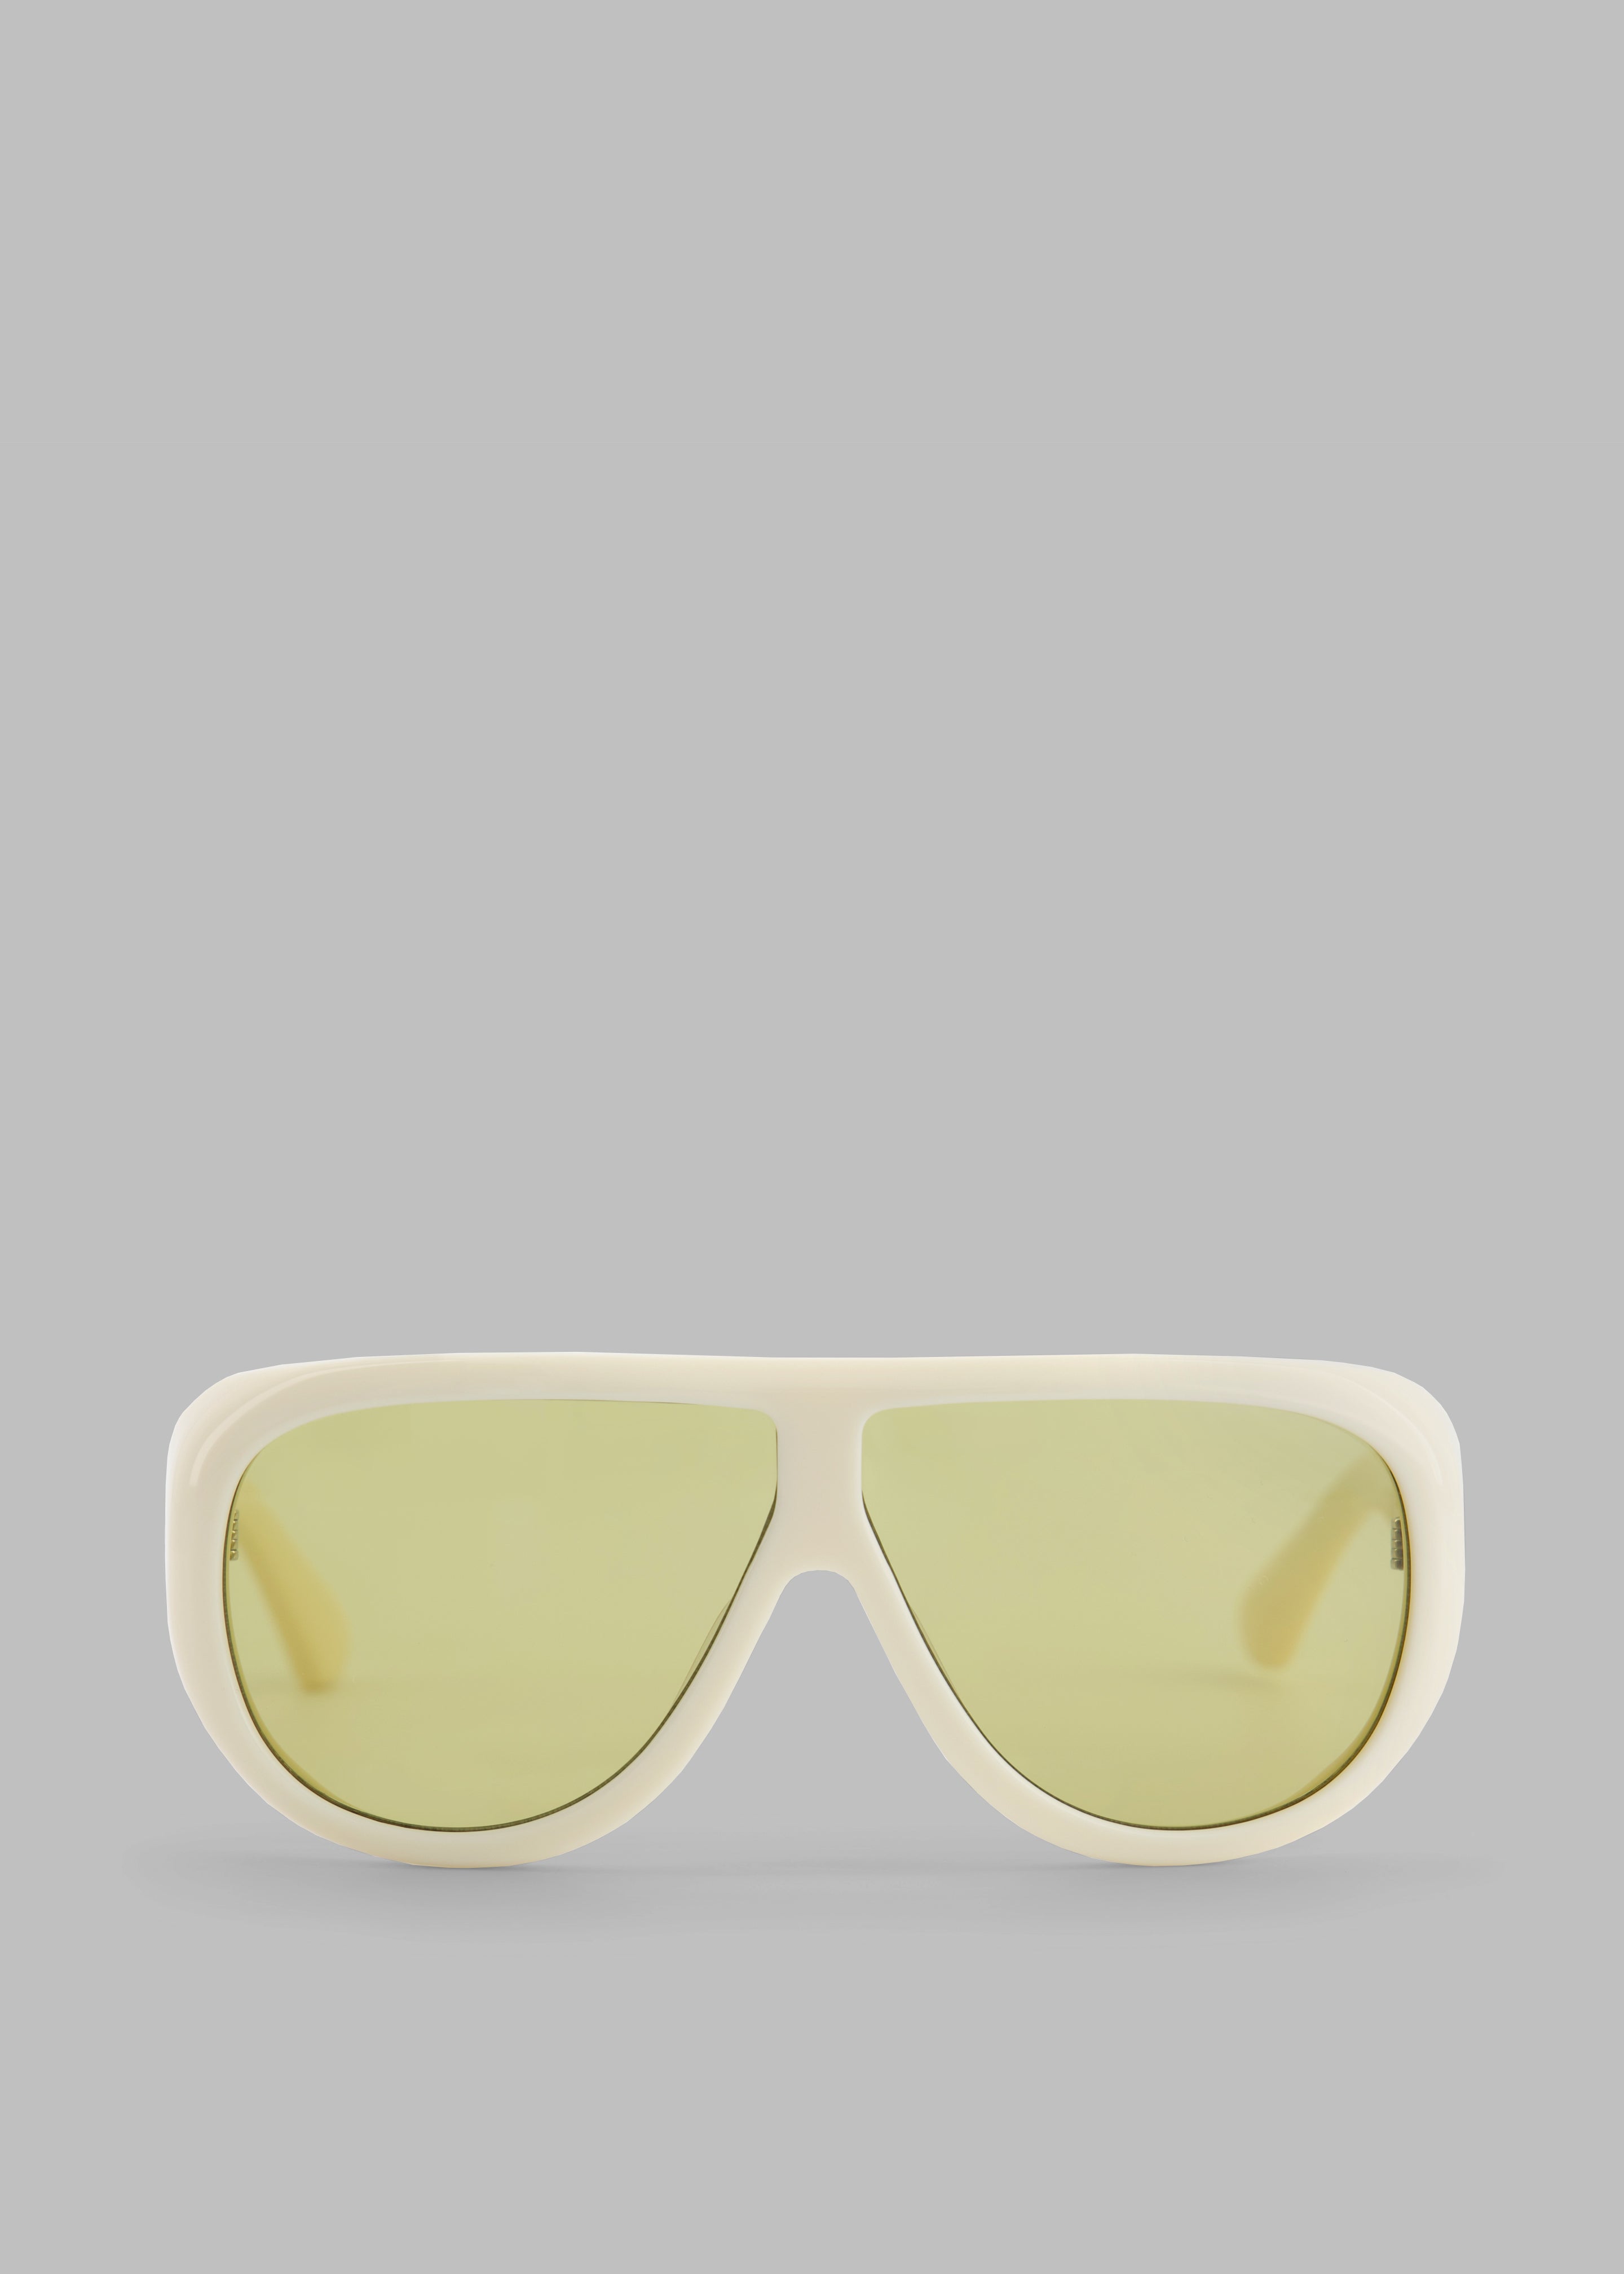 Port Tanger Gambia Sunglasses - Sandarac Acetate/Tangerine Lens - 1